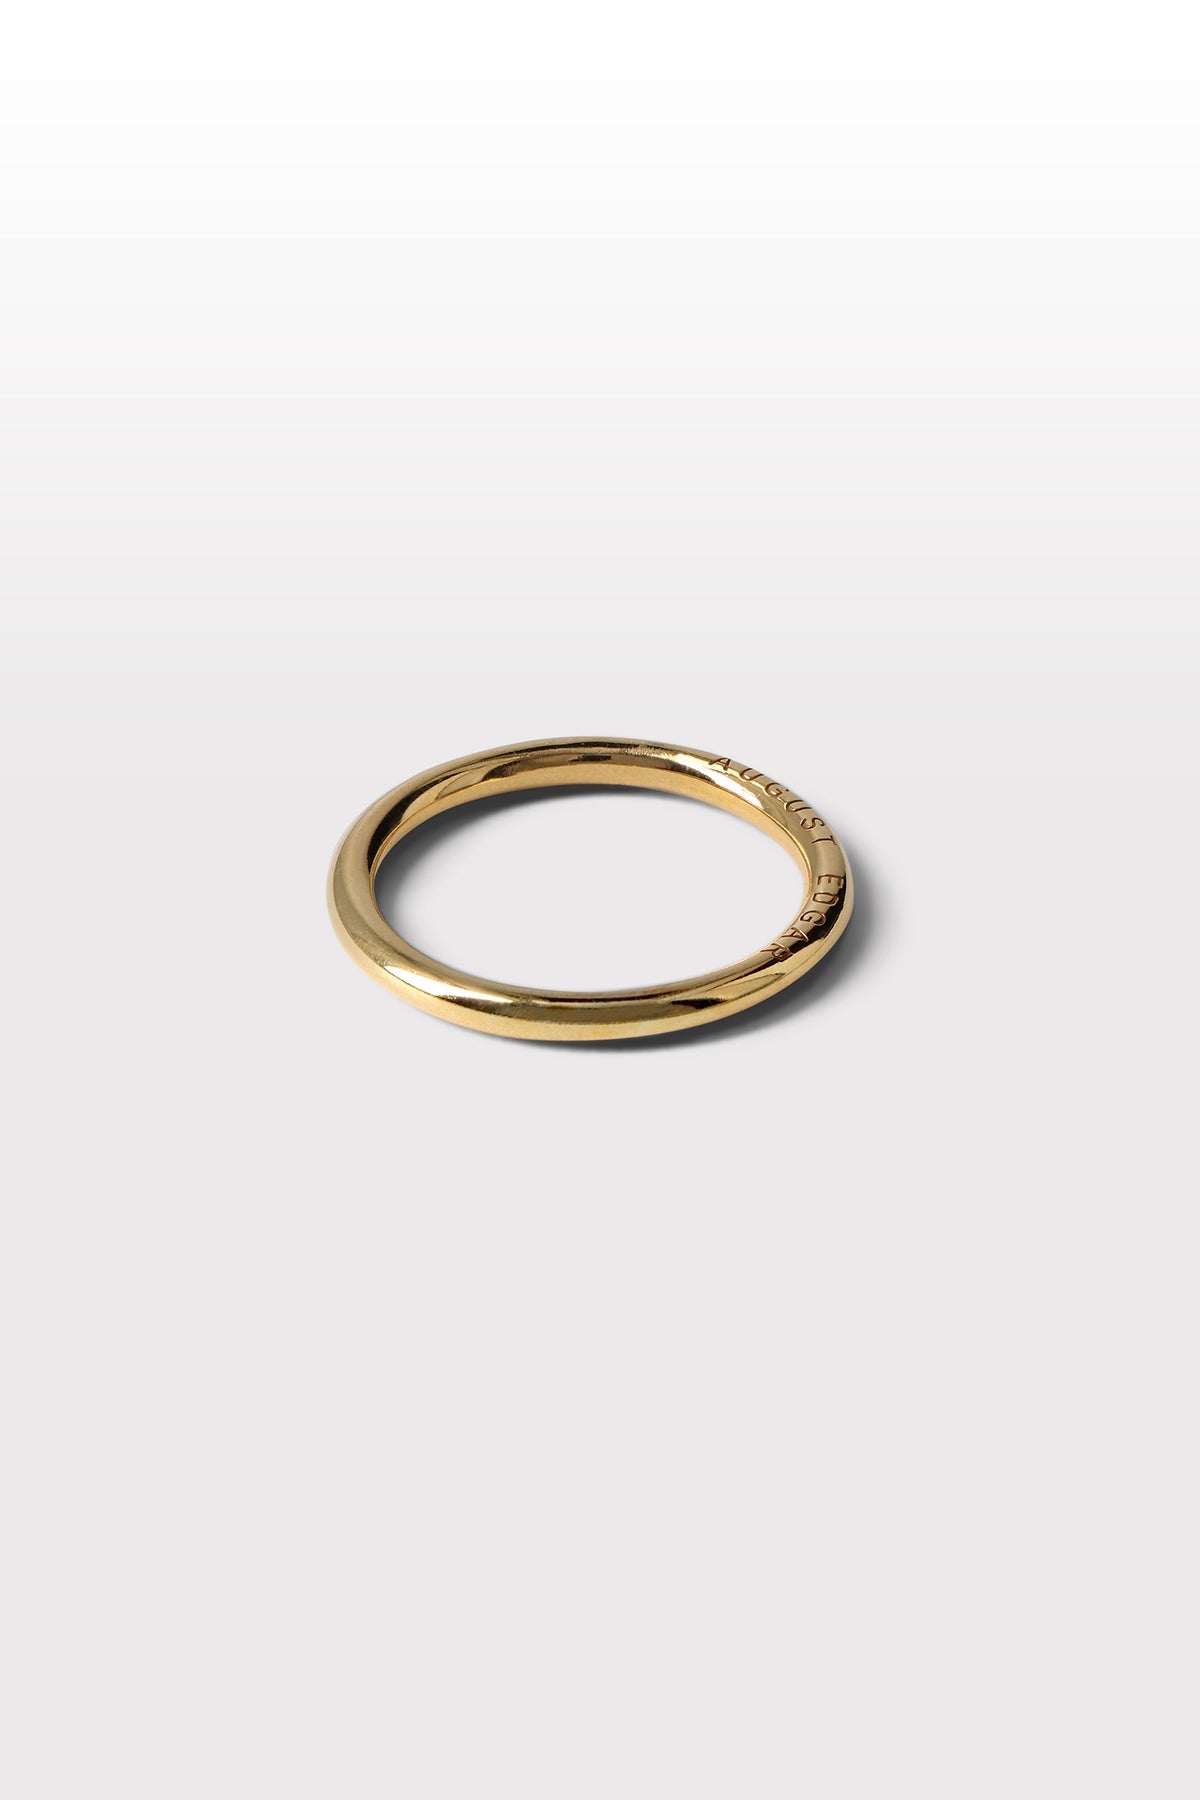 ODE+ Ring 01 18K Geel Goud